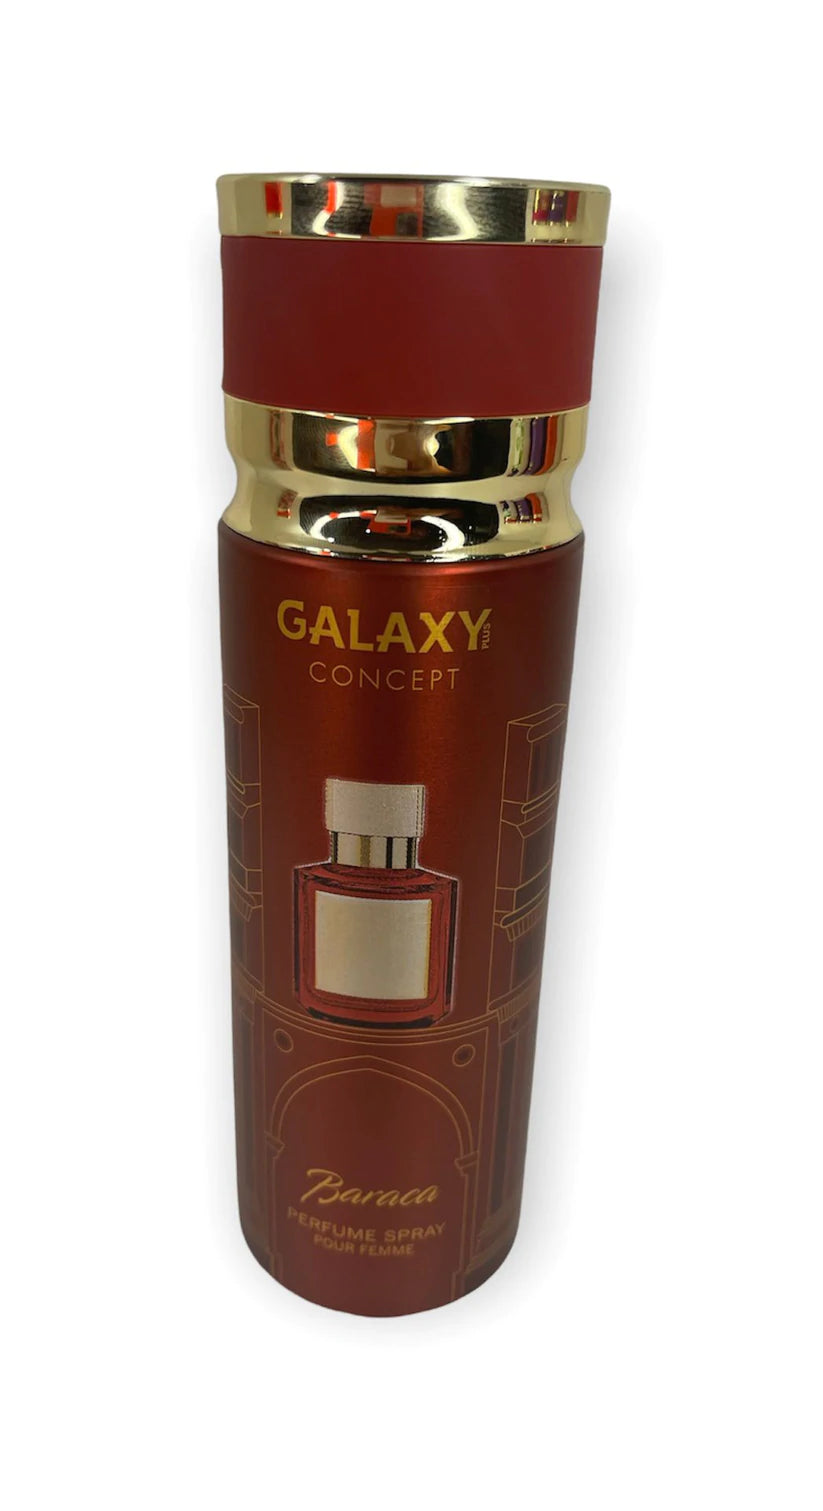 Galaxy Concept BARACA Parfum Body Spray Pour Femme 200ml